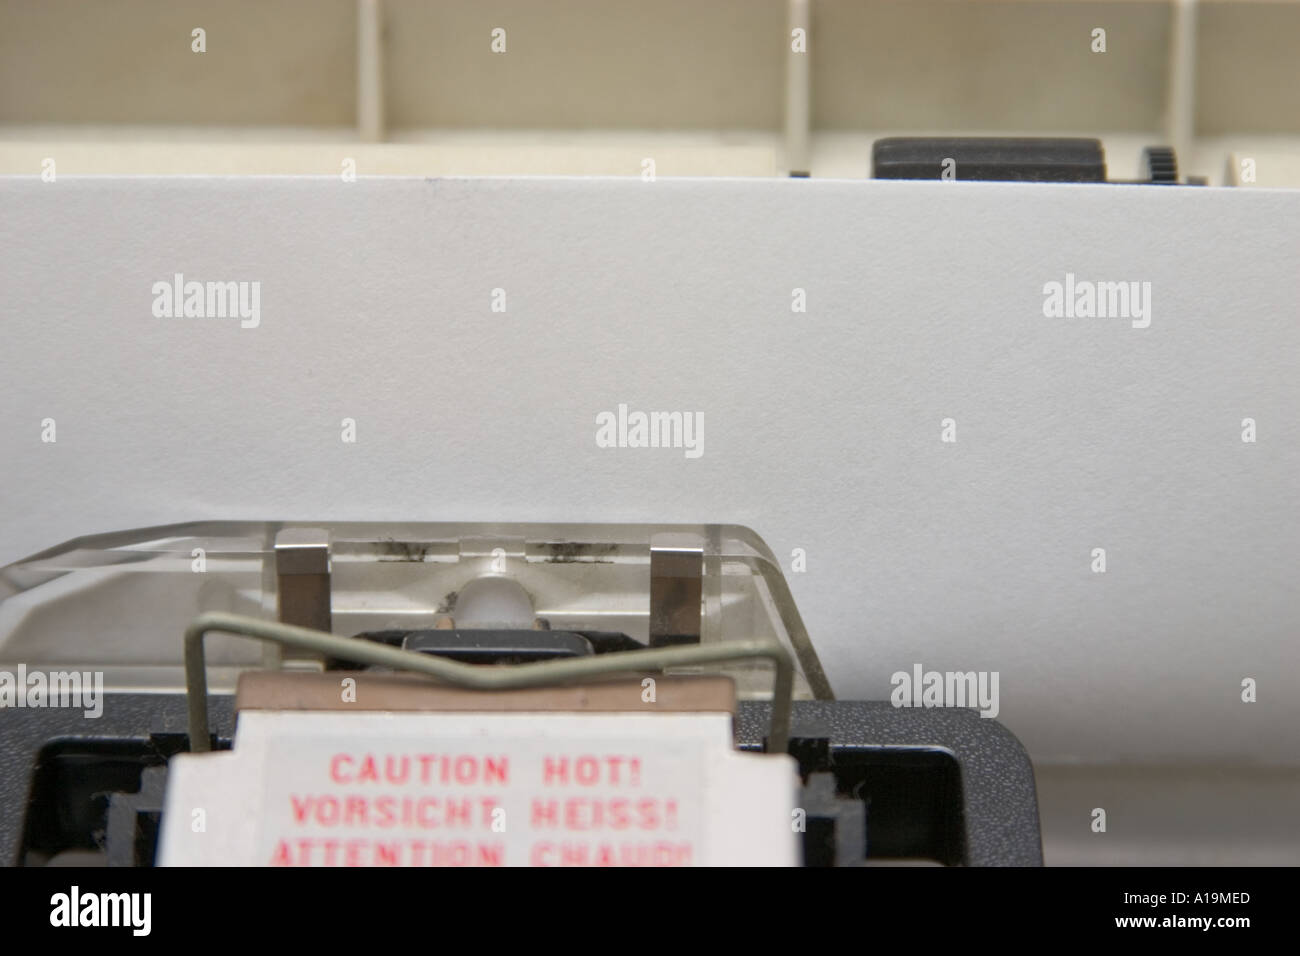 Impresora matricial fotografías e imágenes de alta resolución - Alamy